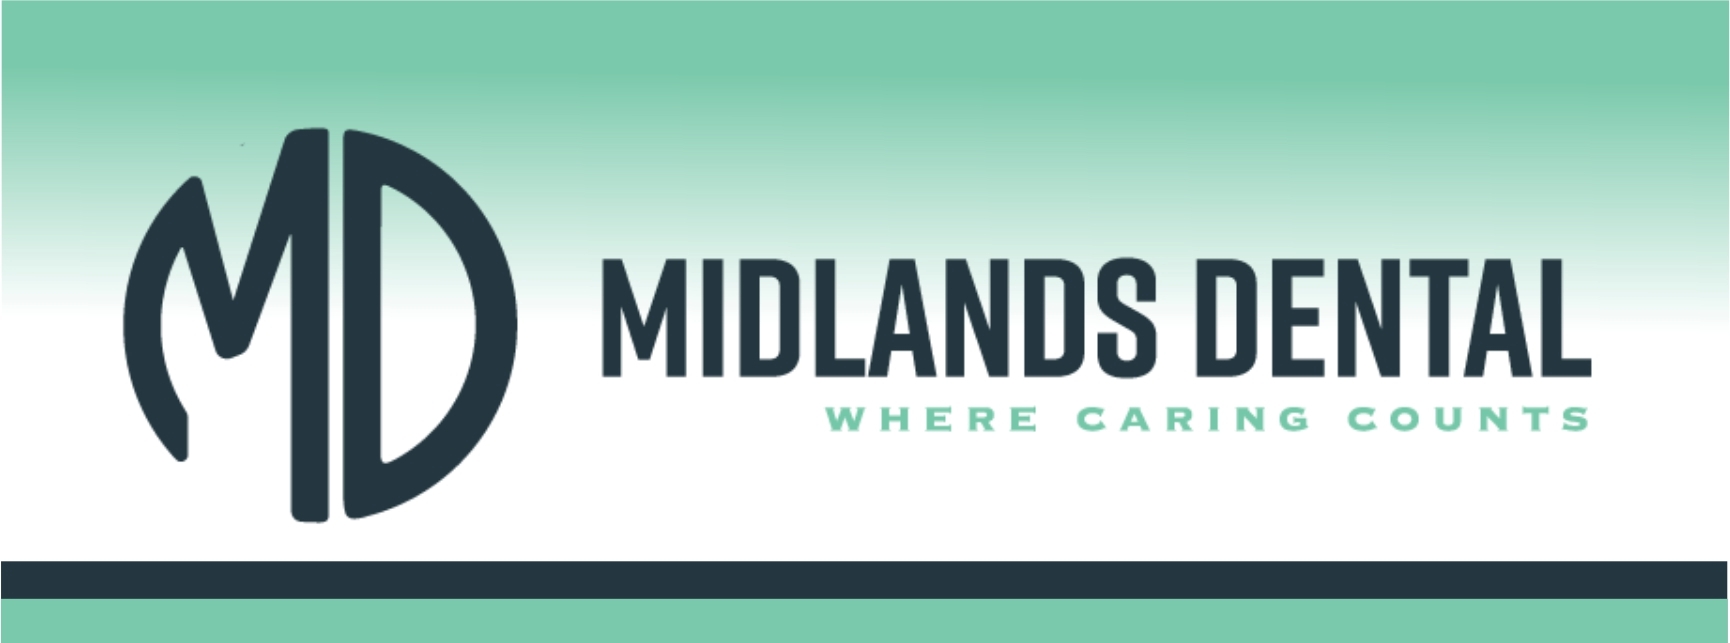 Company logo of Midlands Dental LLC